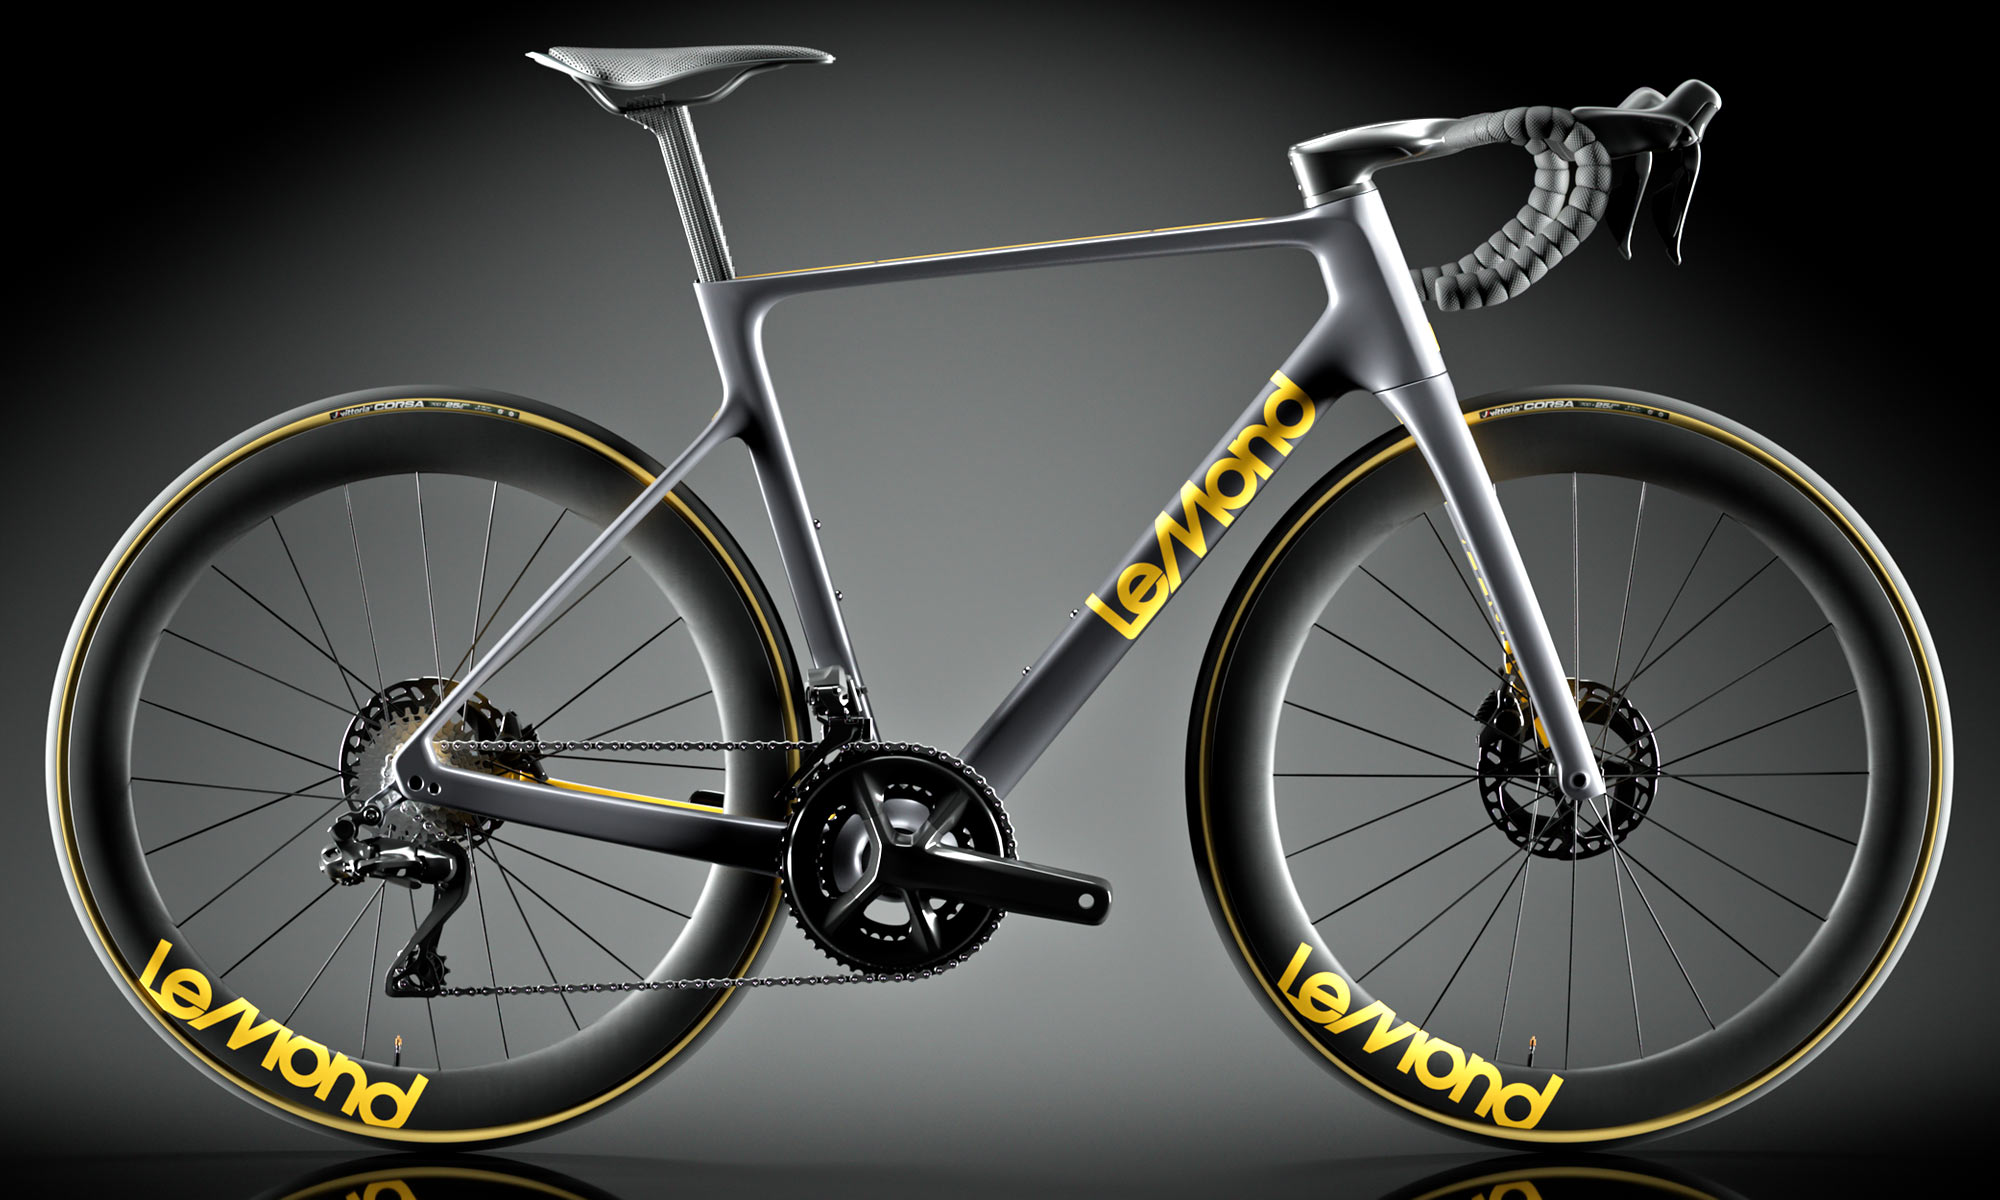 LeMond 8 revolutionary carbon aero road bike, complete